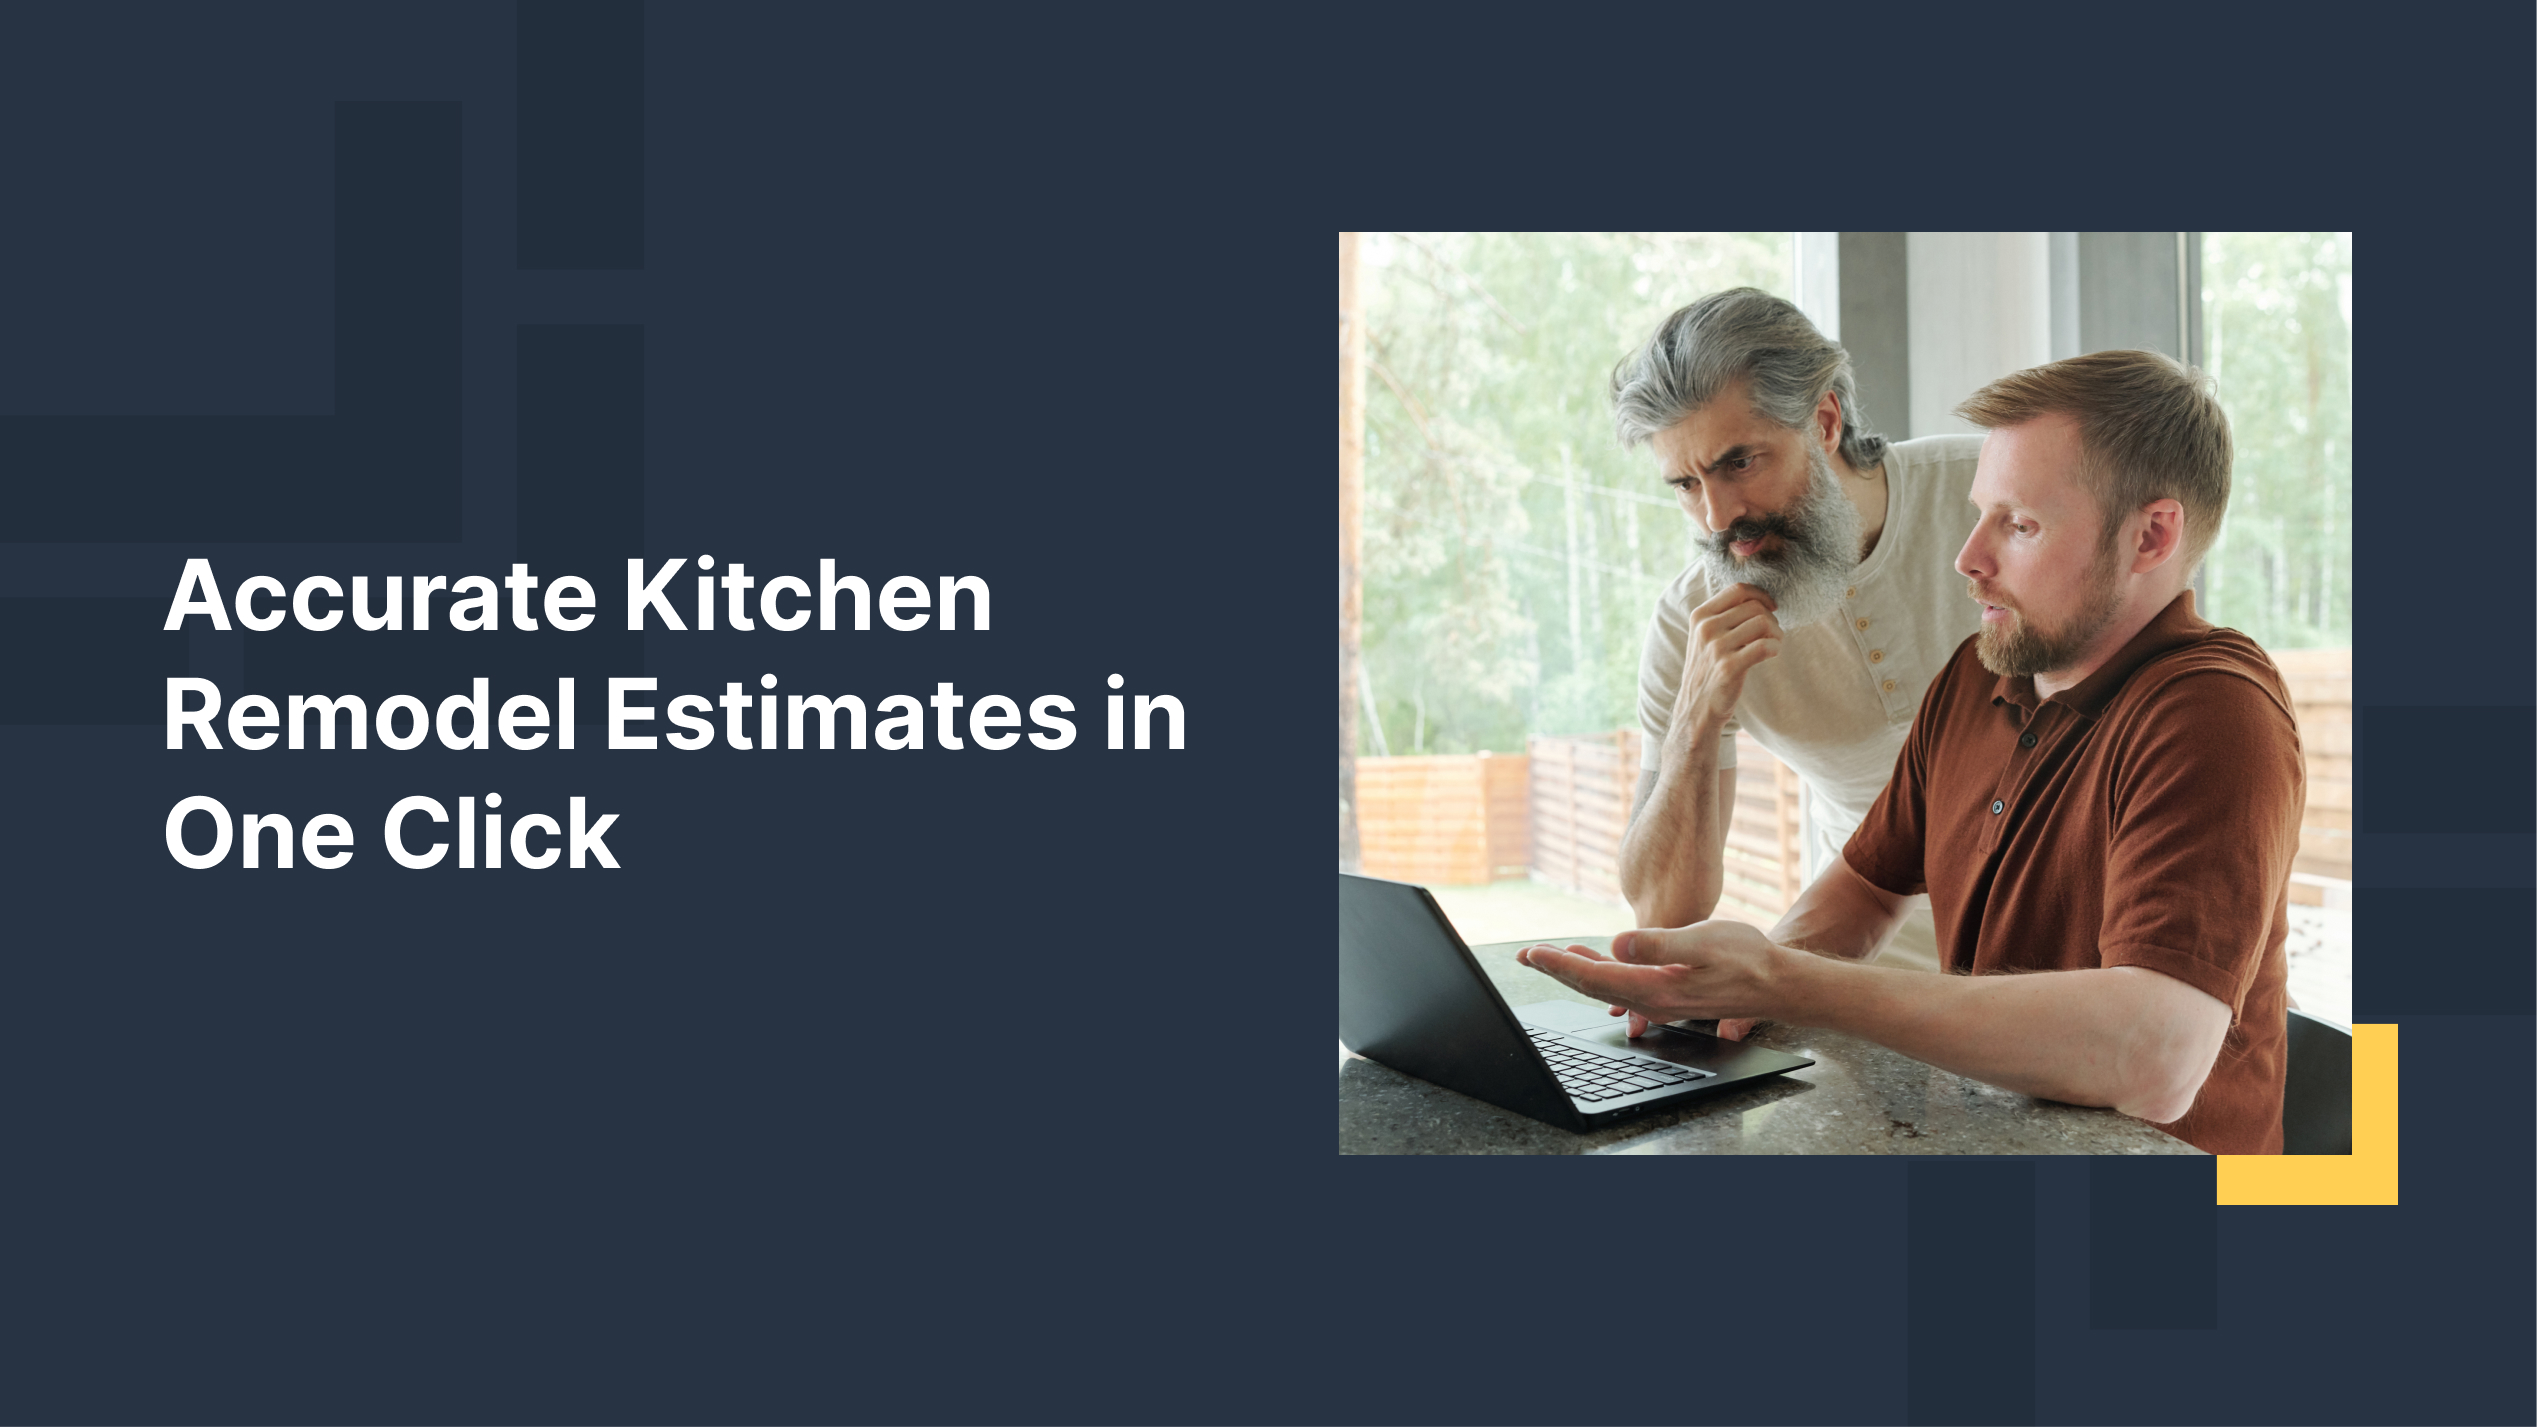 viewing a kitchen remodel estimate